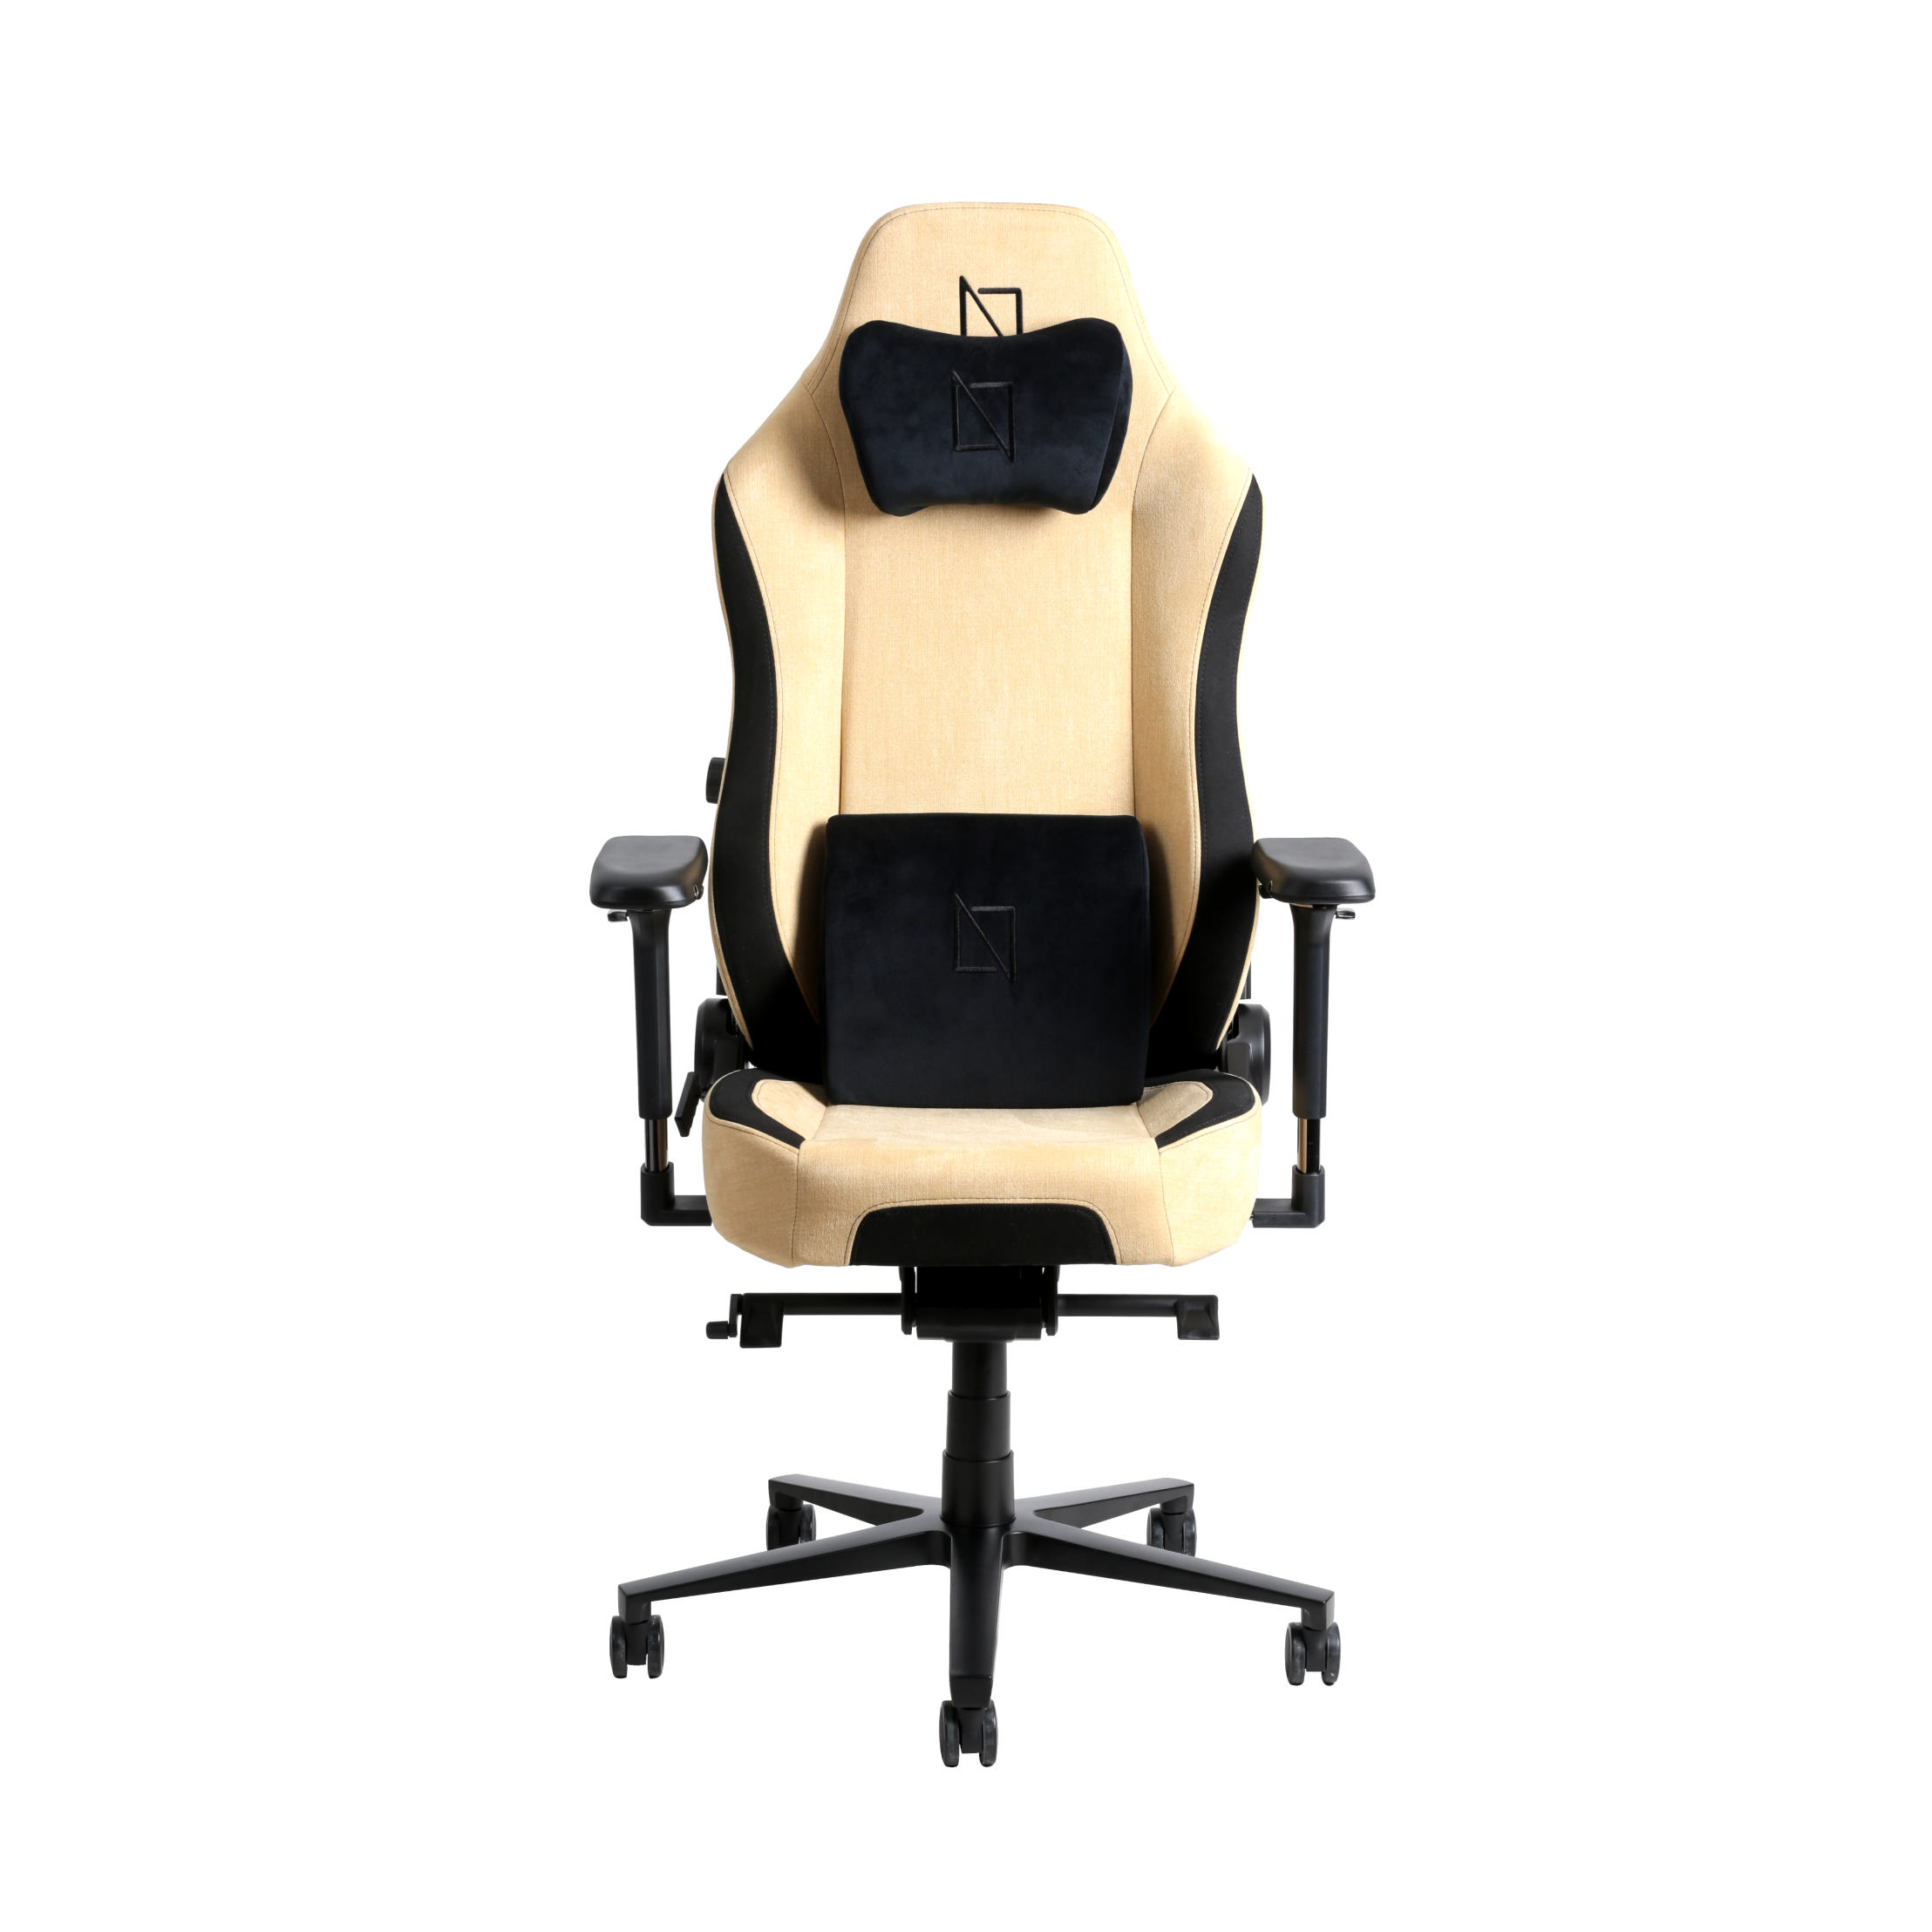 Apex Gaming Ergonomic Chair By Navoergonomic | Office Chairs Dubai